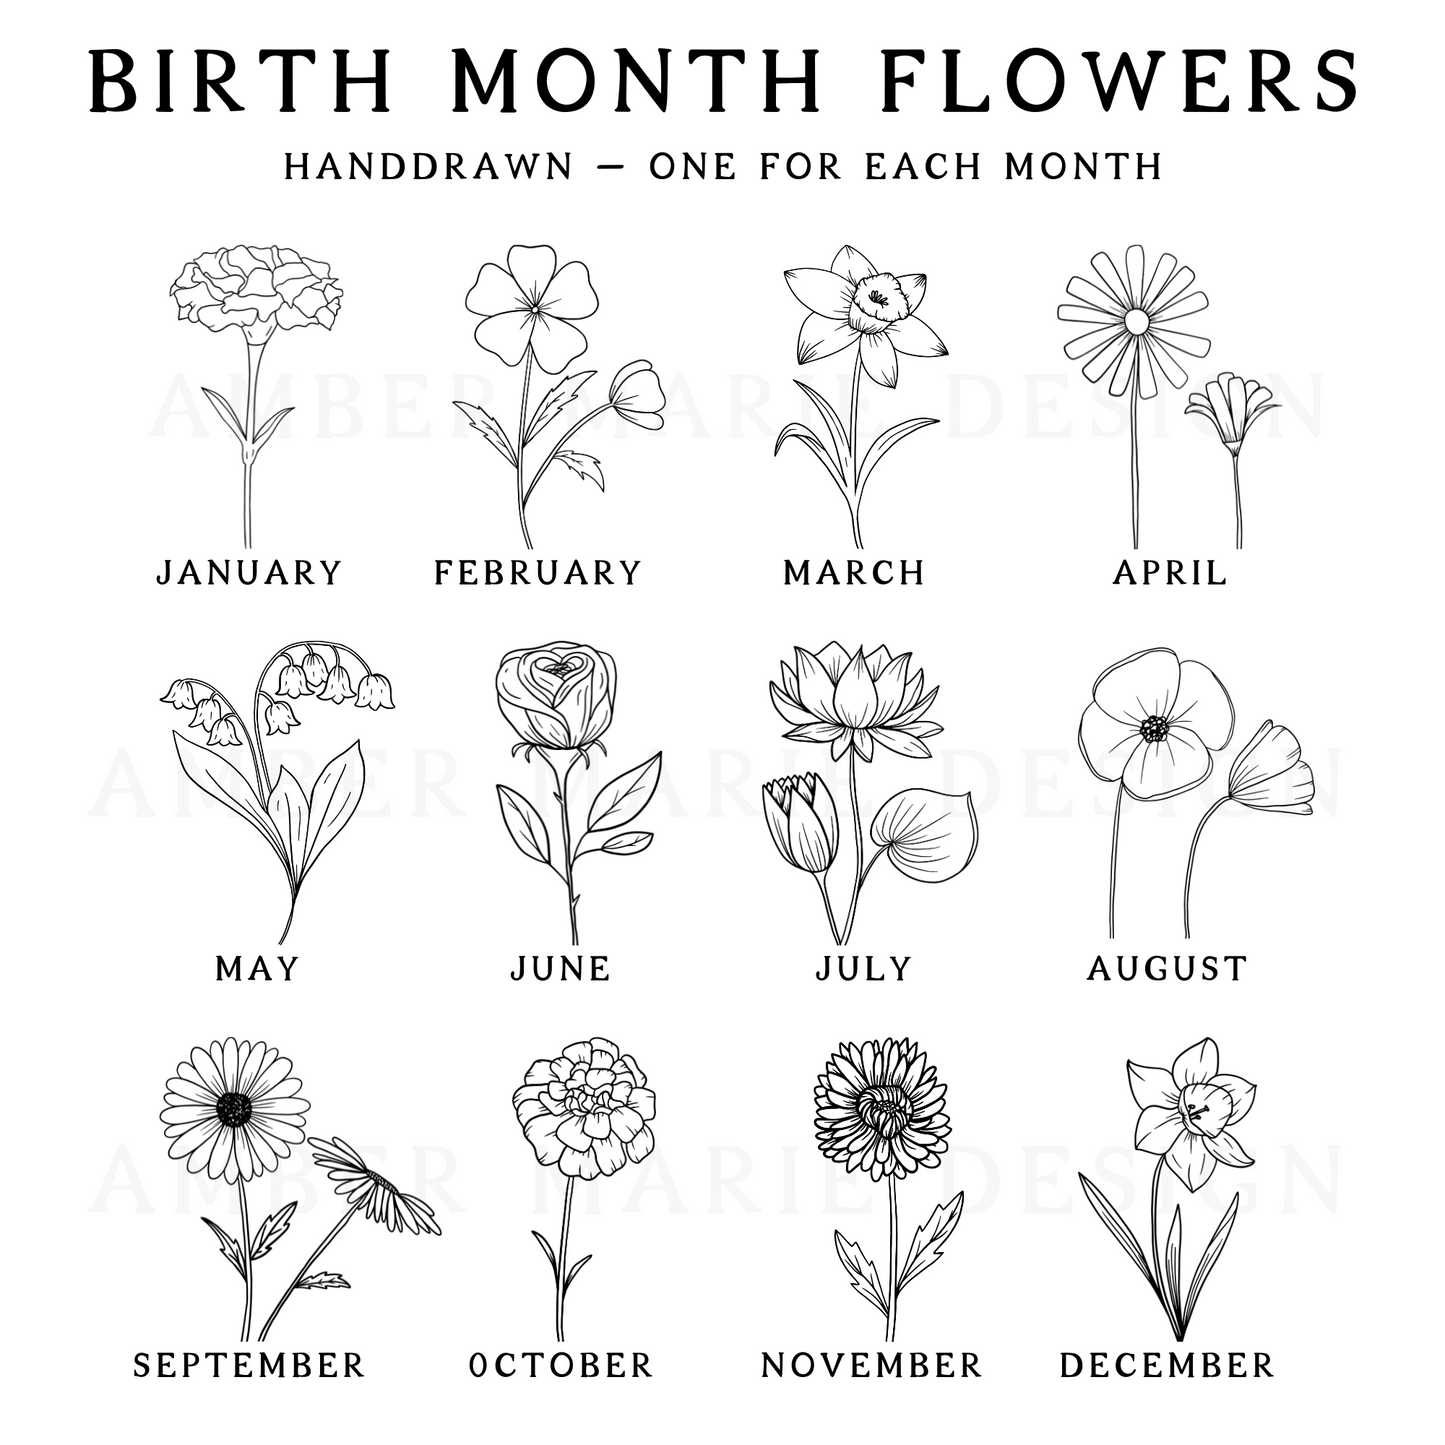 Personalized Birth Month Flower Drinkware